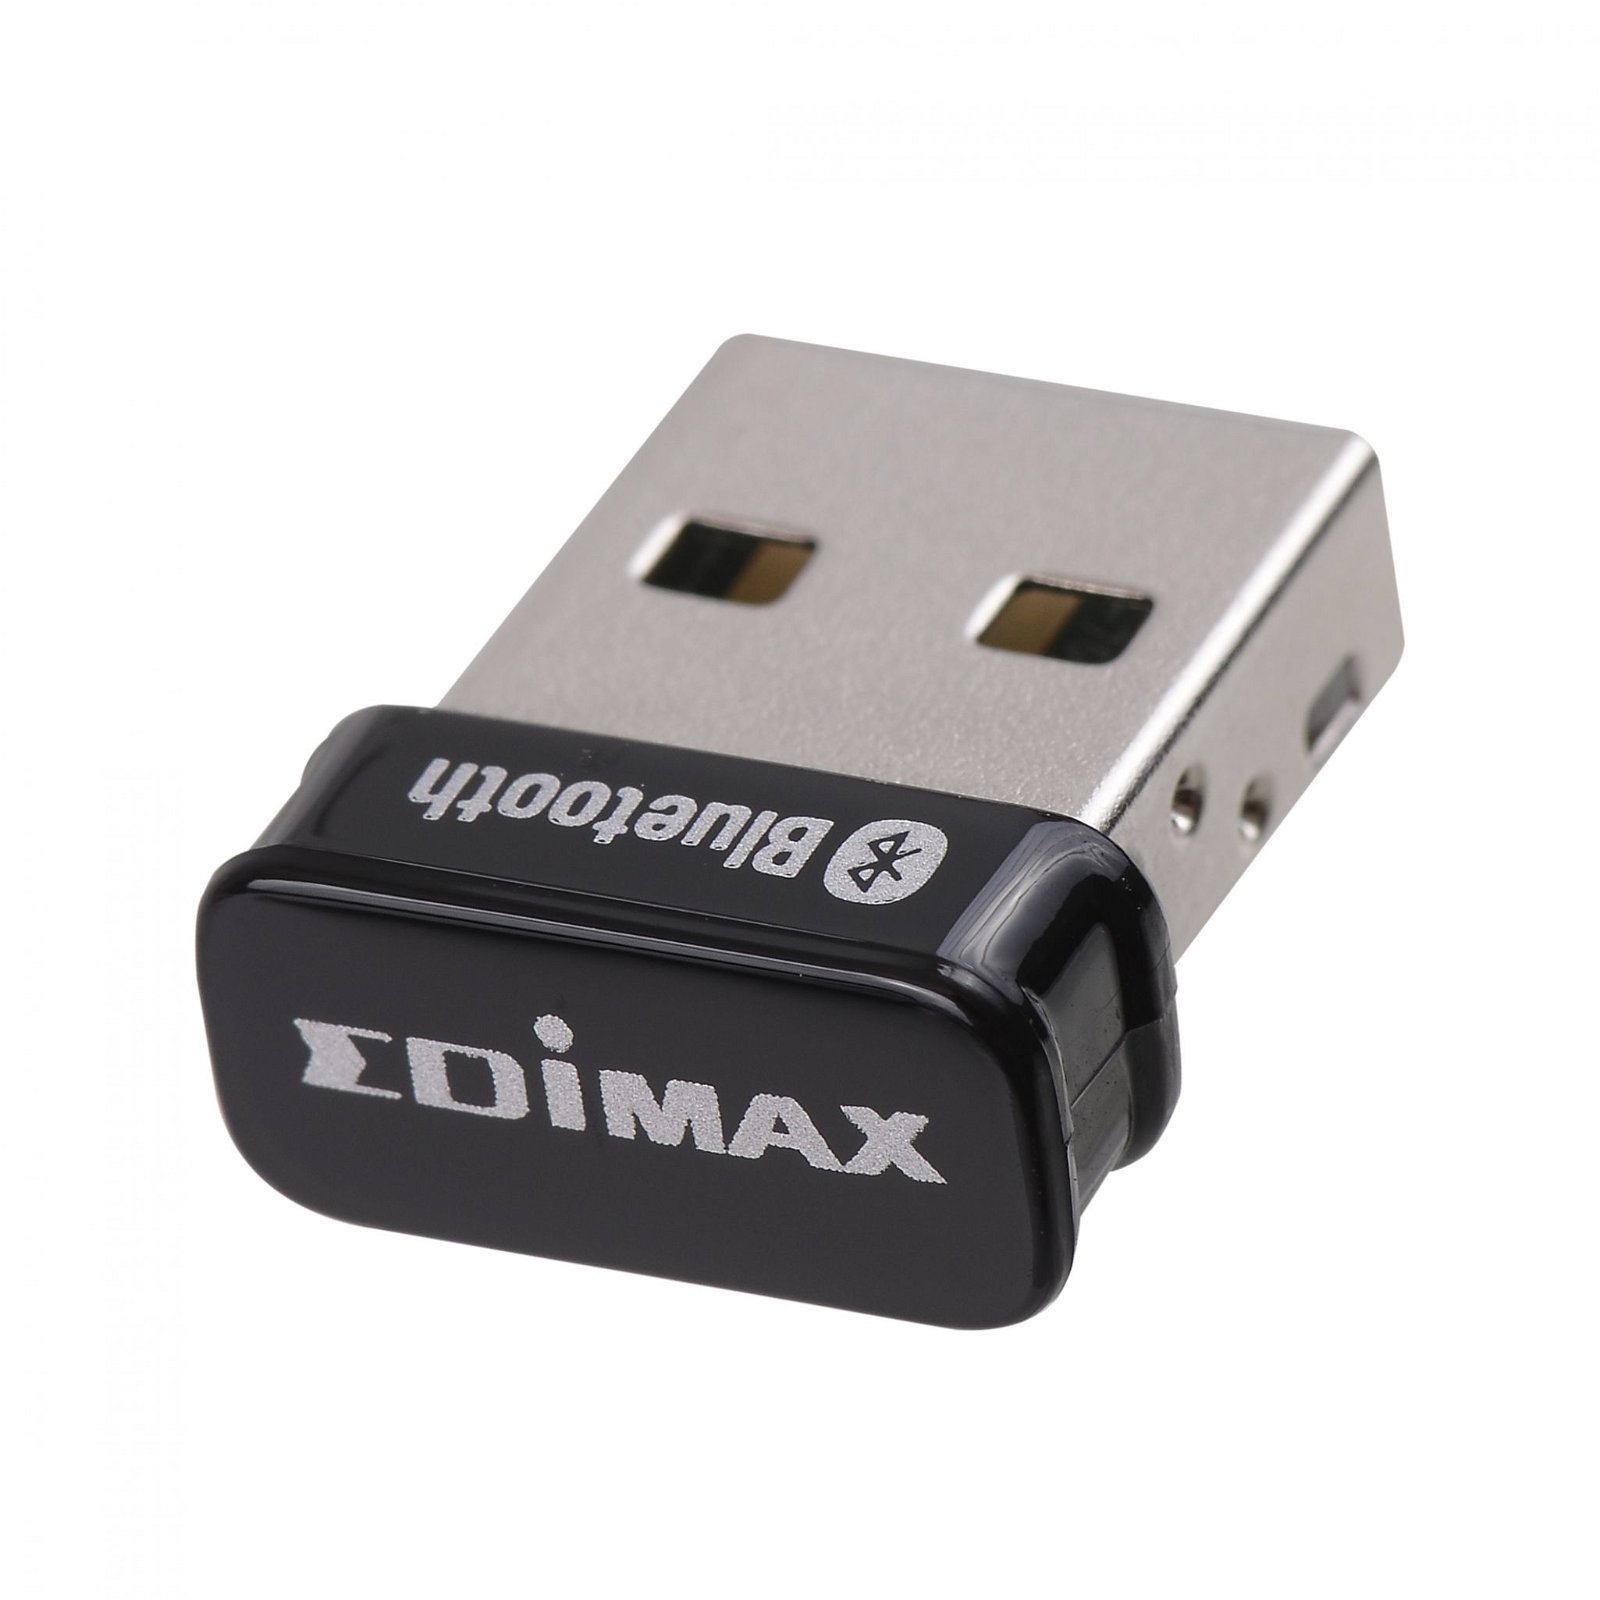 Edimax BT-8500 Bluetooth 5.0 USB Dongle